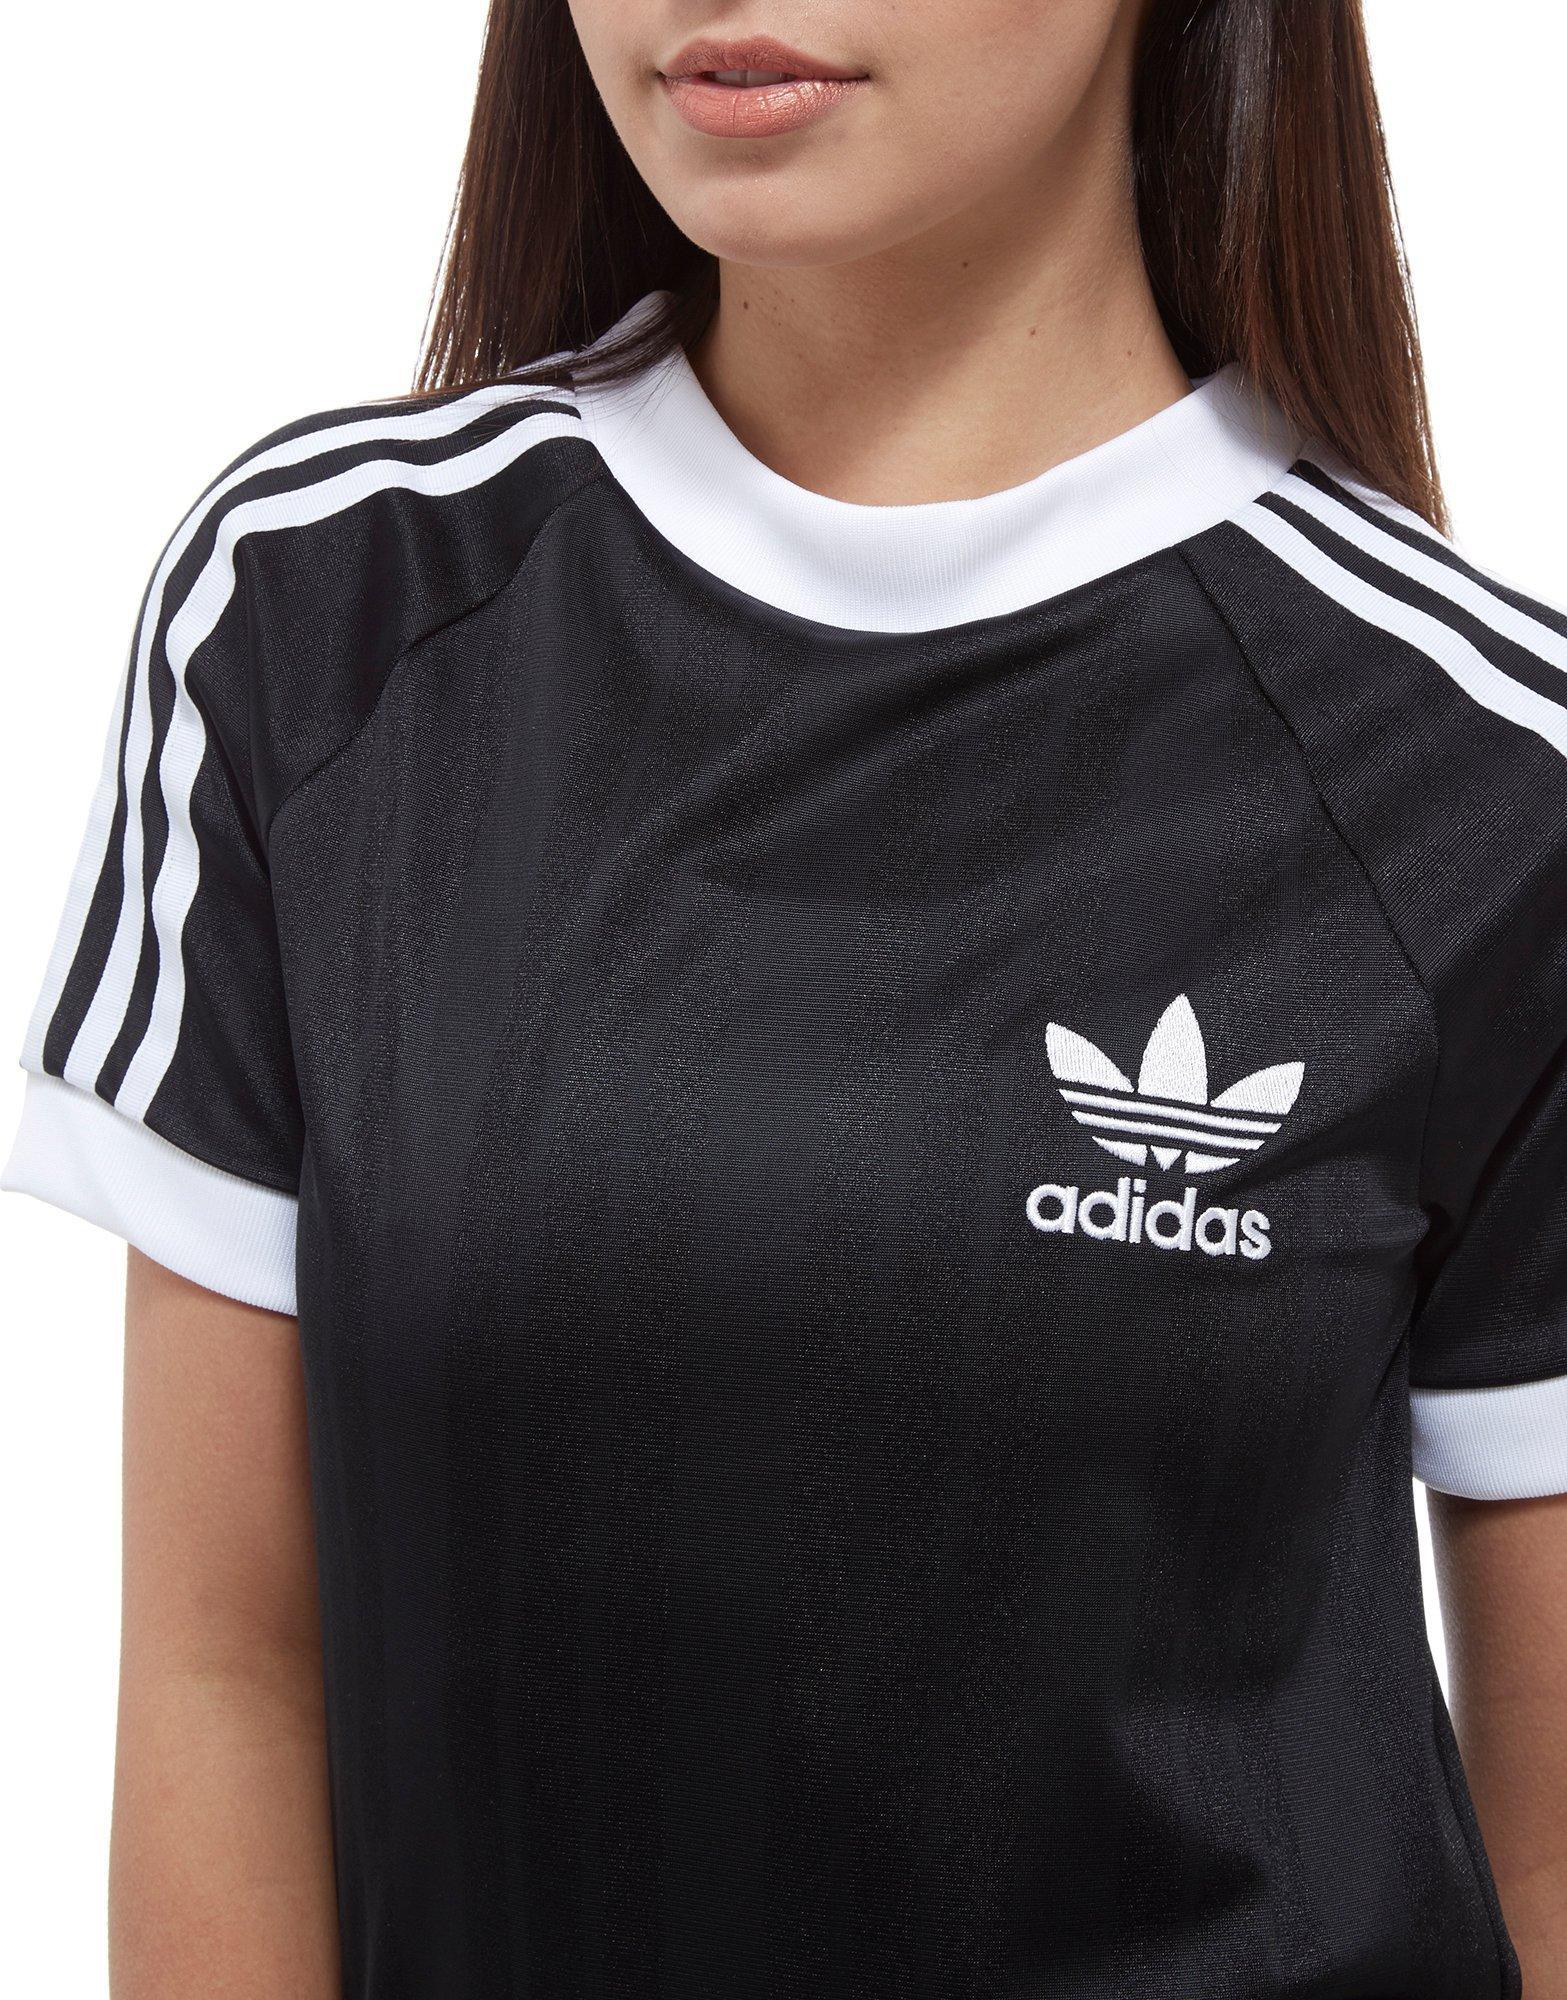 Buy > adidas football t shirt > in stock